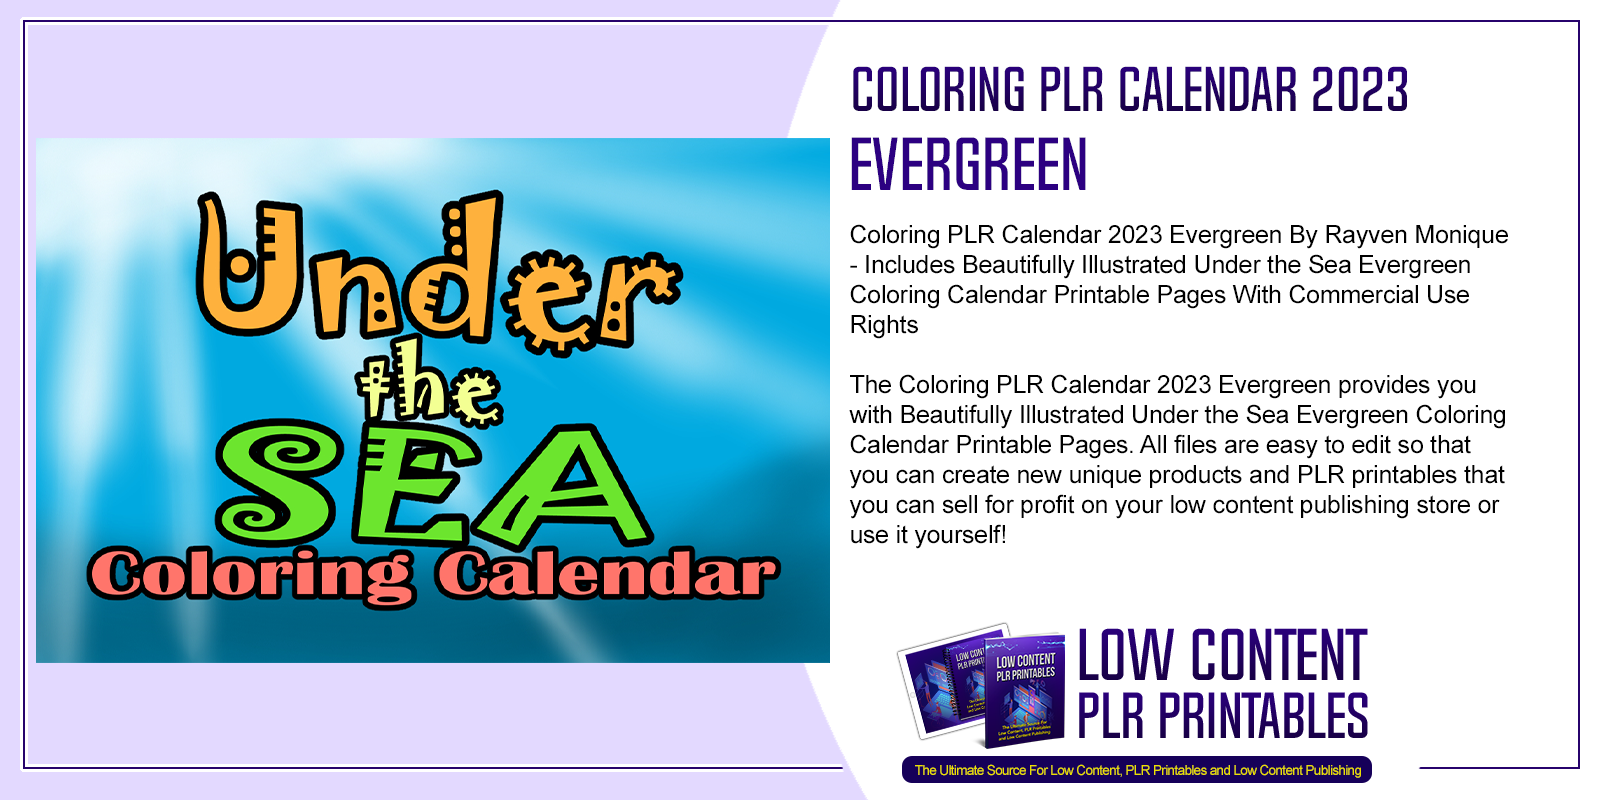 Coloring PLR Calendar 2023 Evergreen